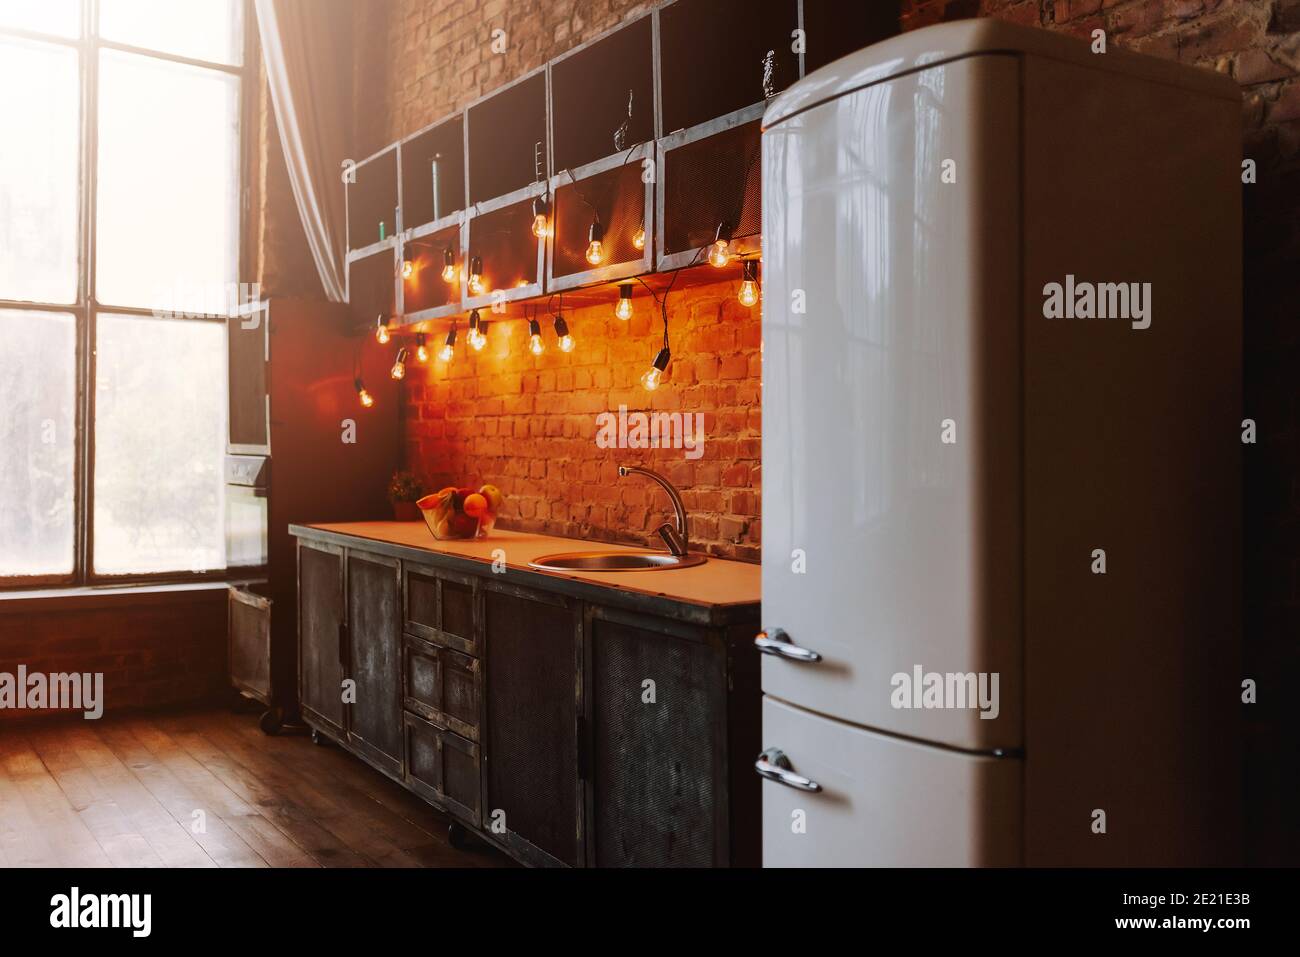 Design interior of wooden kitchen with big window. Image of modern light cozy kitchen. Stock Photo